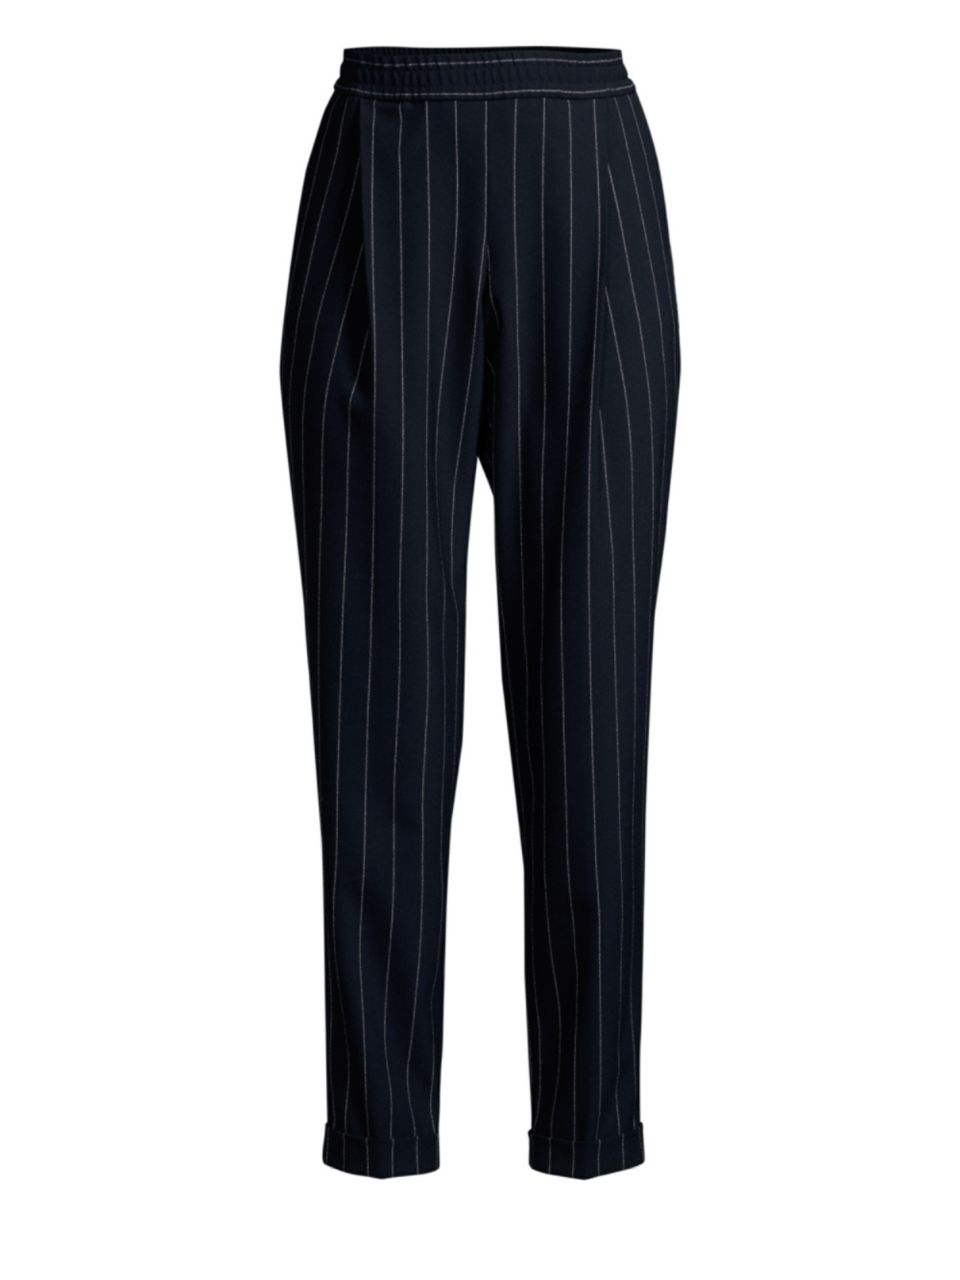 Hugo Boss 'Ariysa' Pinstripe Cropped Trousers